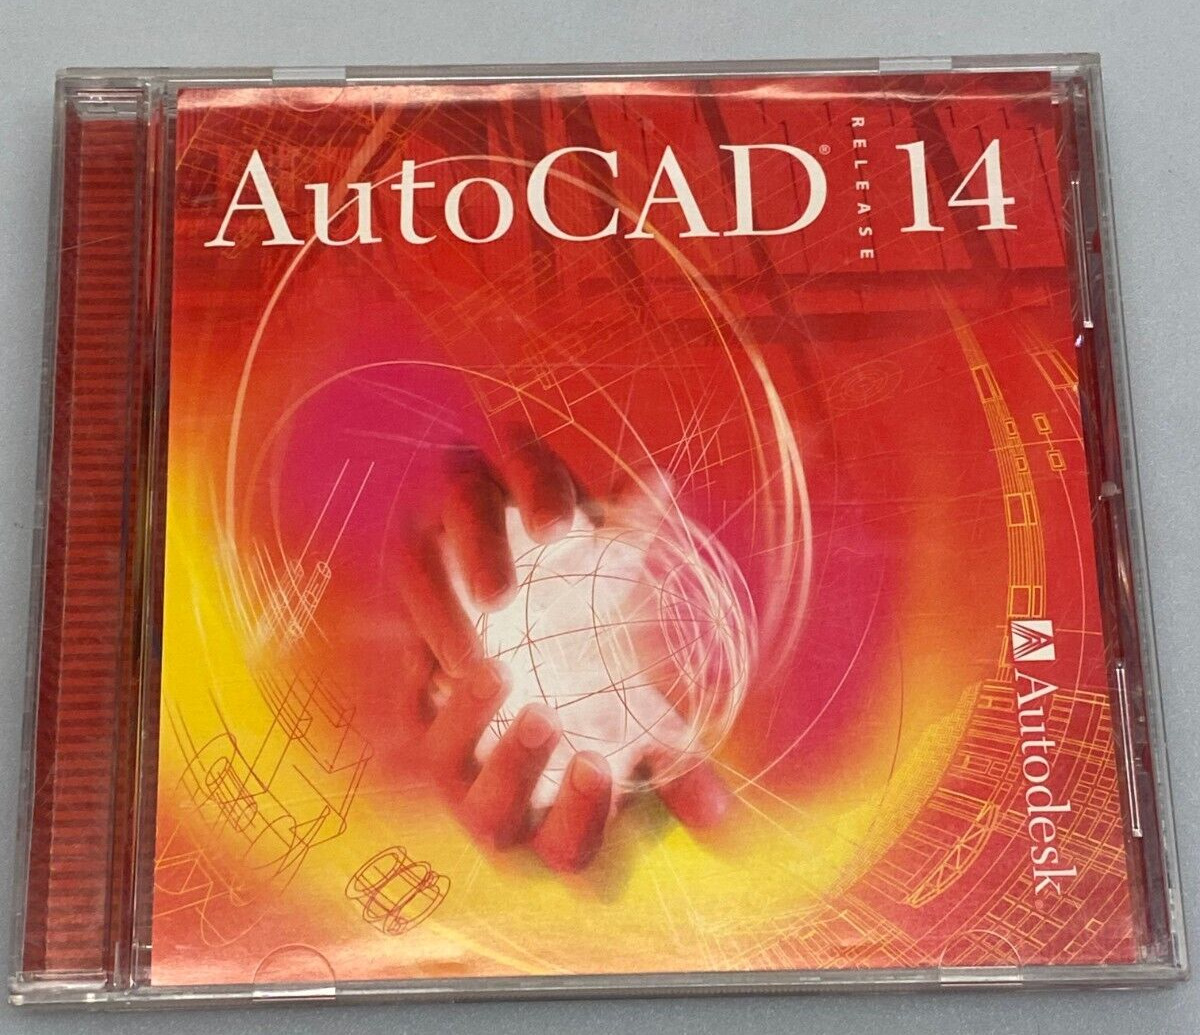 Autodesk AutoCAD release 14 CD  Auto CAD